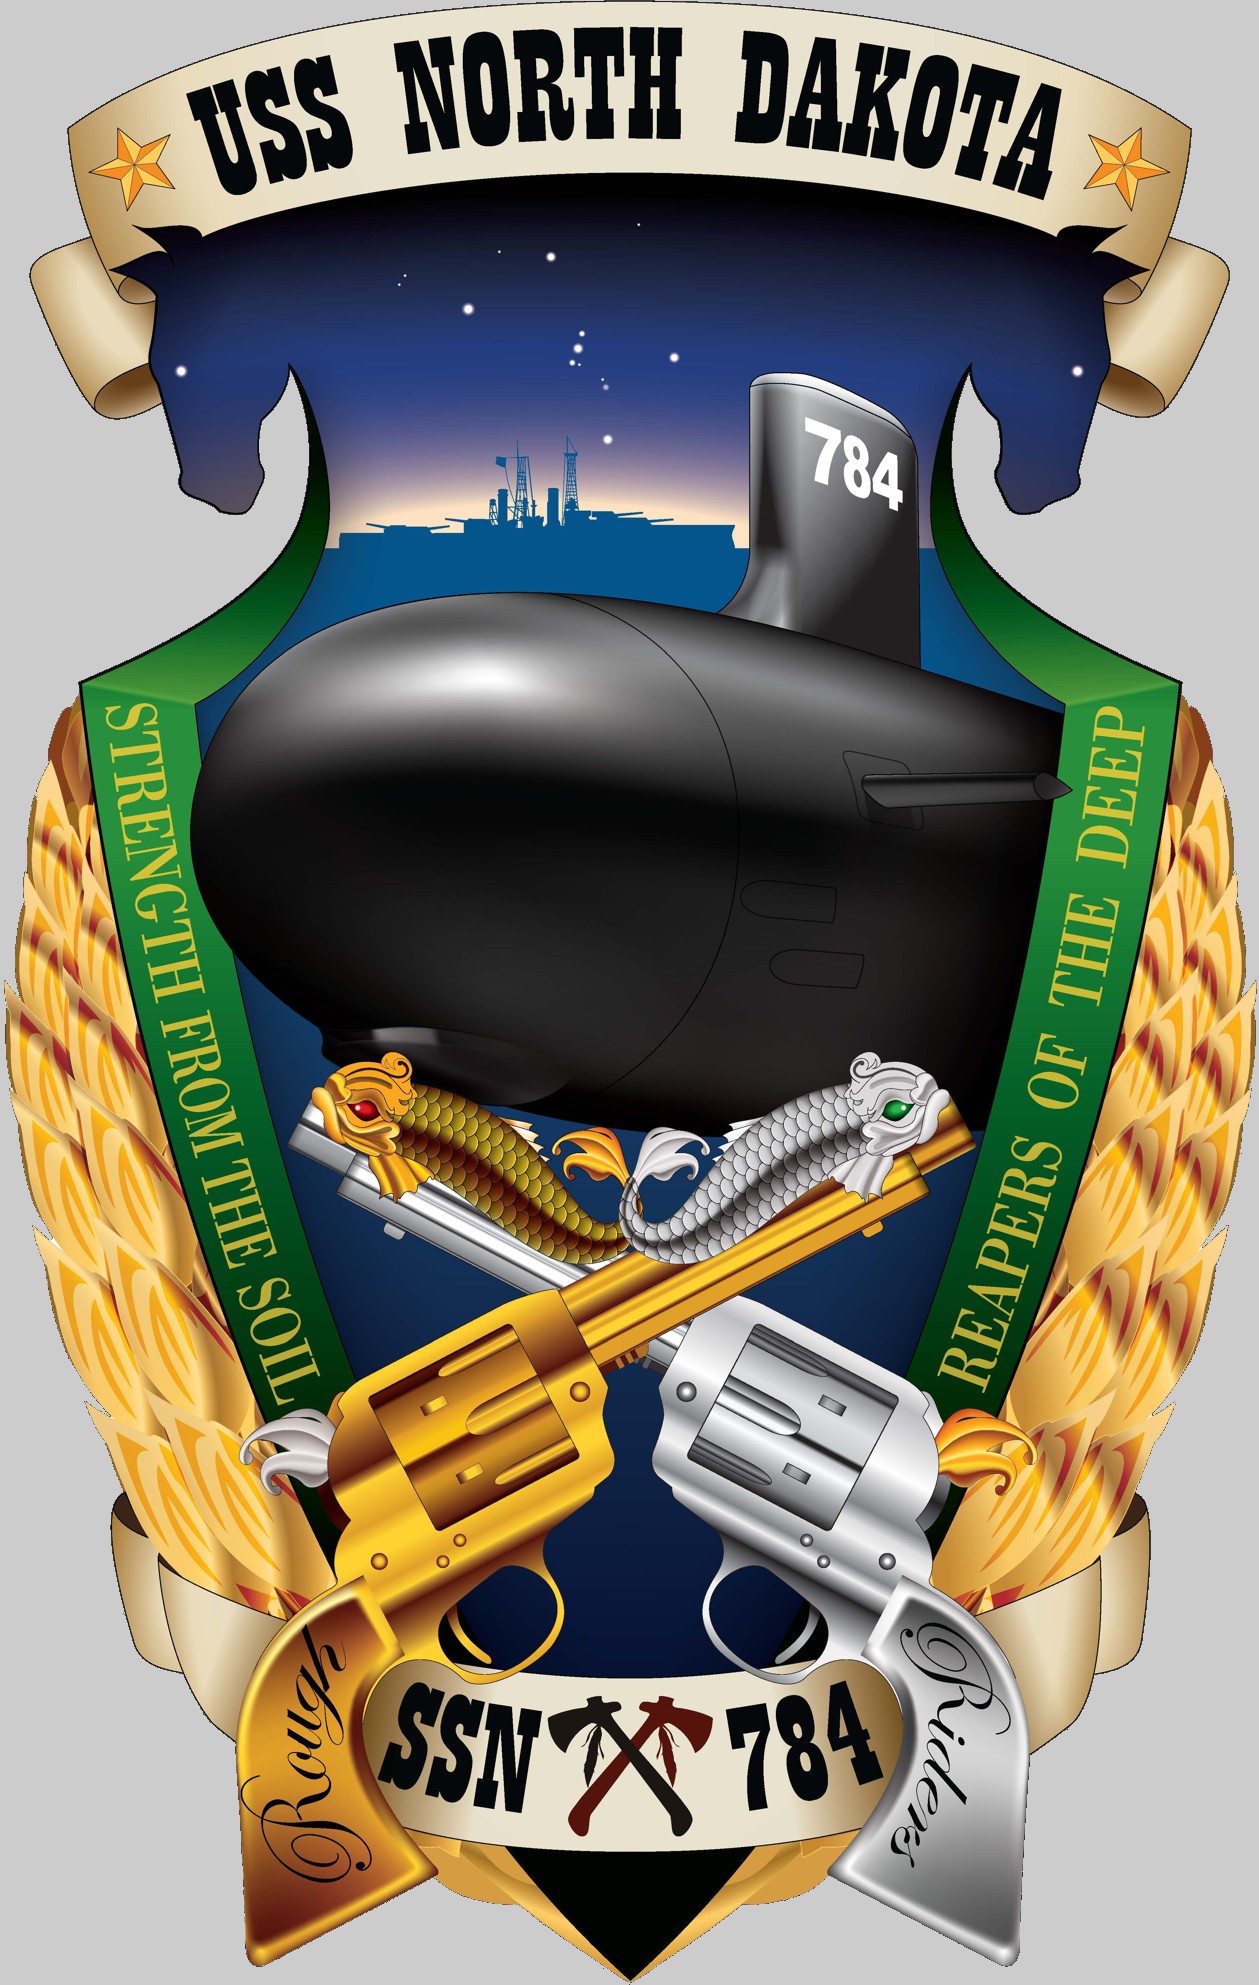 ssn-784 uss north dakota insignia crest patch badge virginia class attack submarine us navy 02c